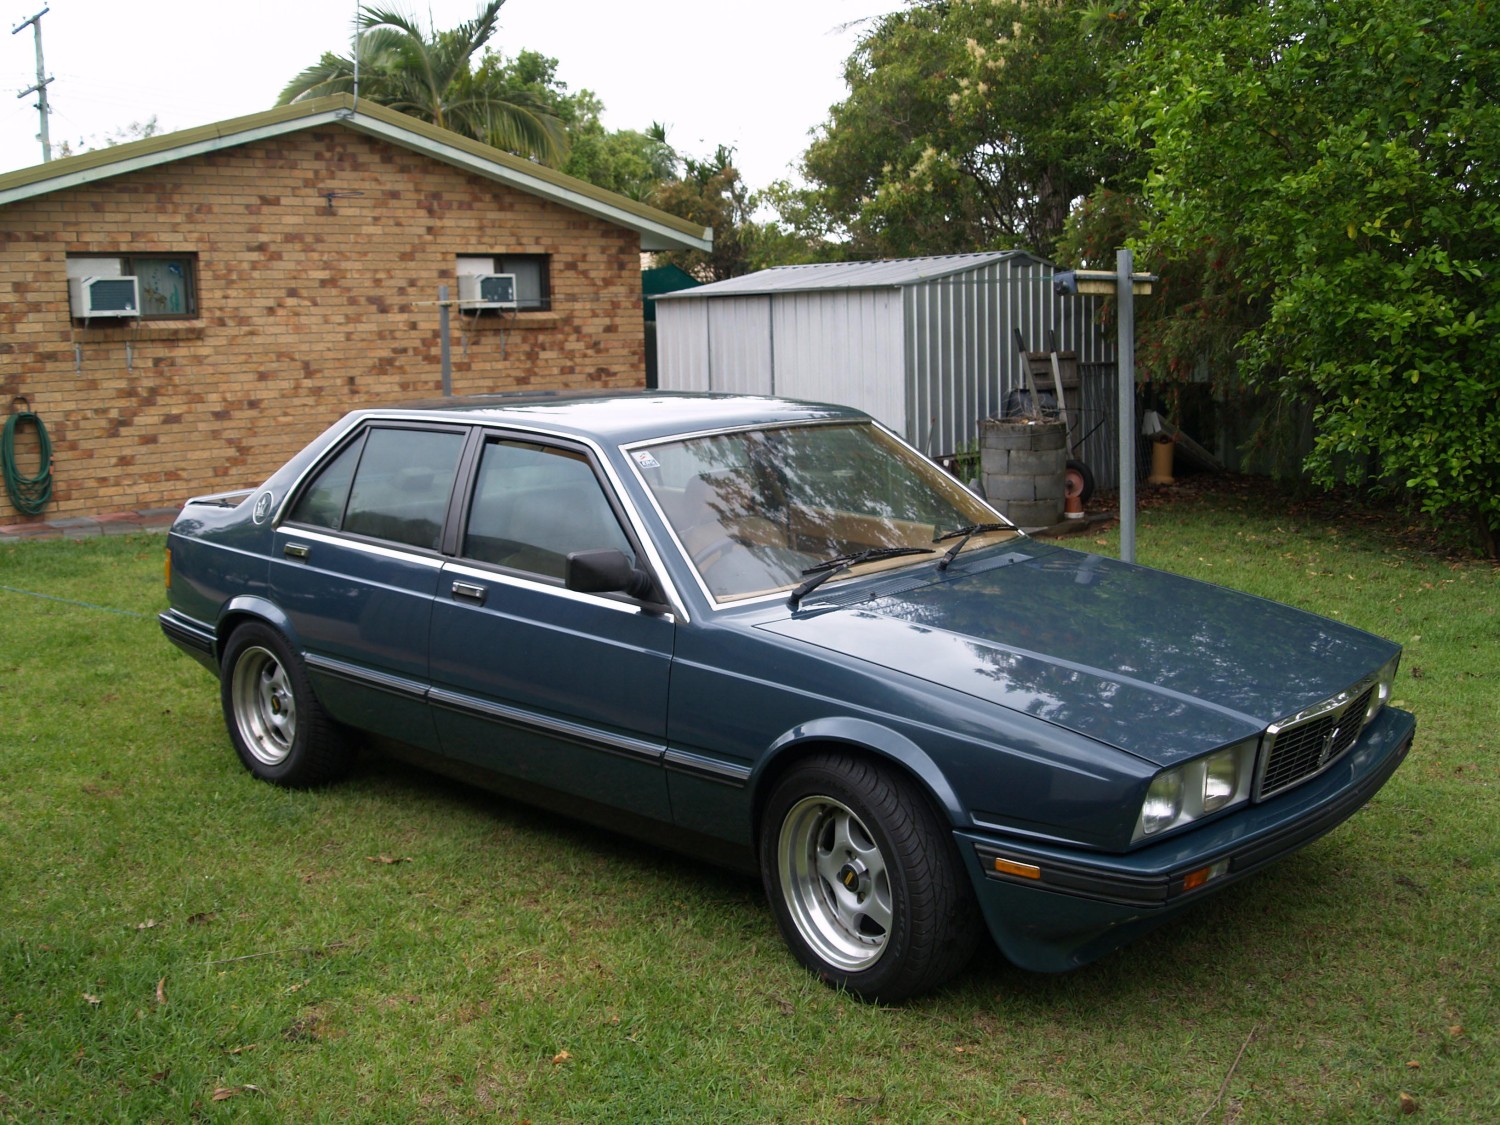 1987 Maserati Biturbo 425i - gammy - Shannons Club